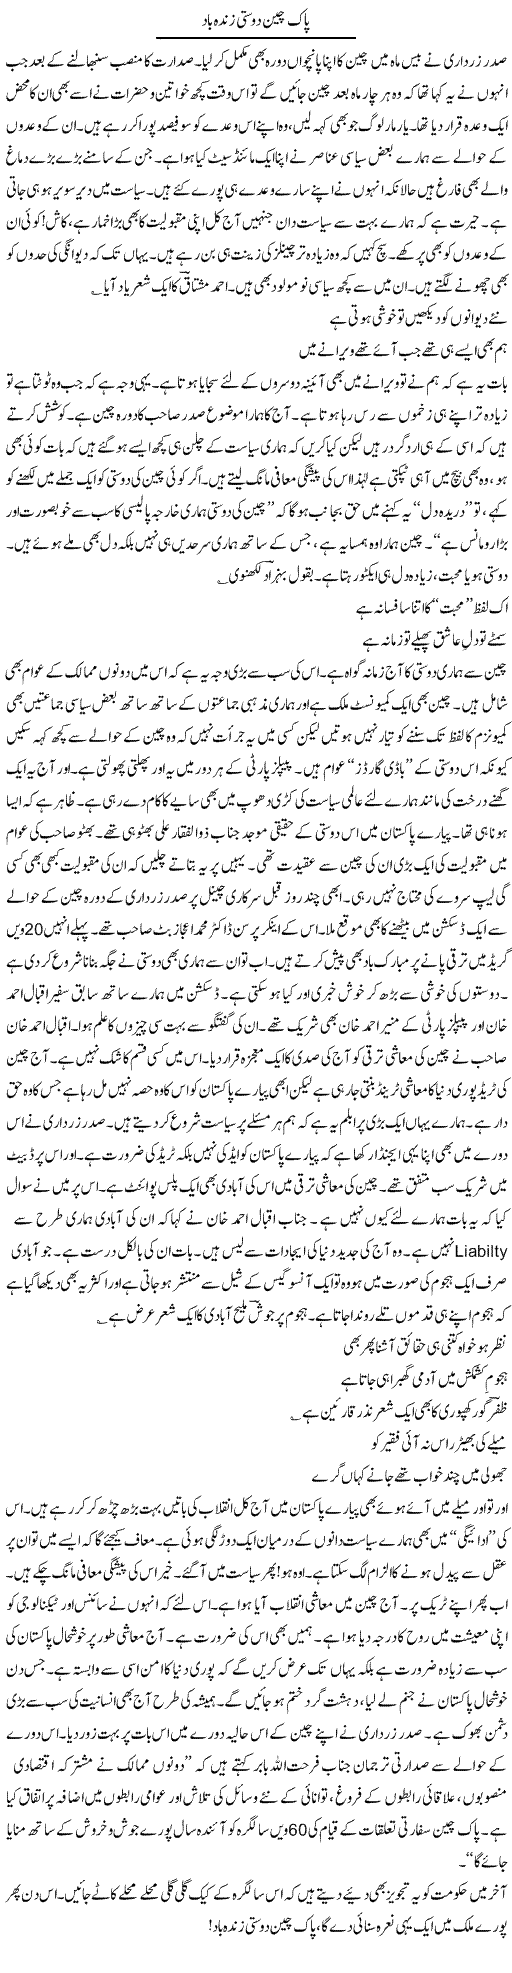 Pak China Dosti Express Column Ijaz Hafeez 19 July 2010